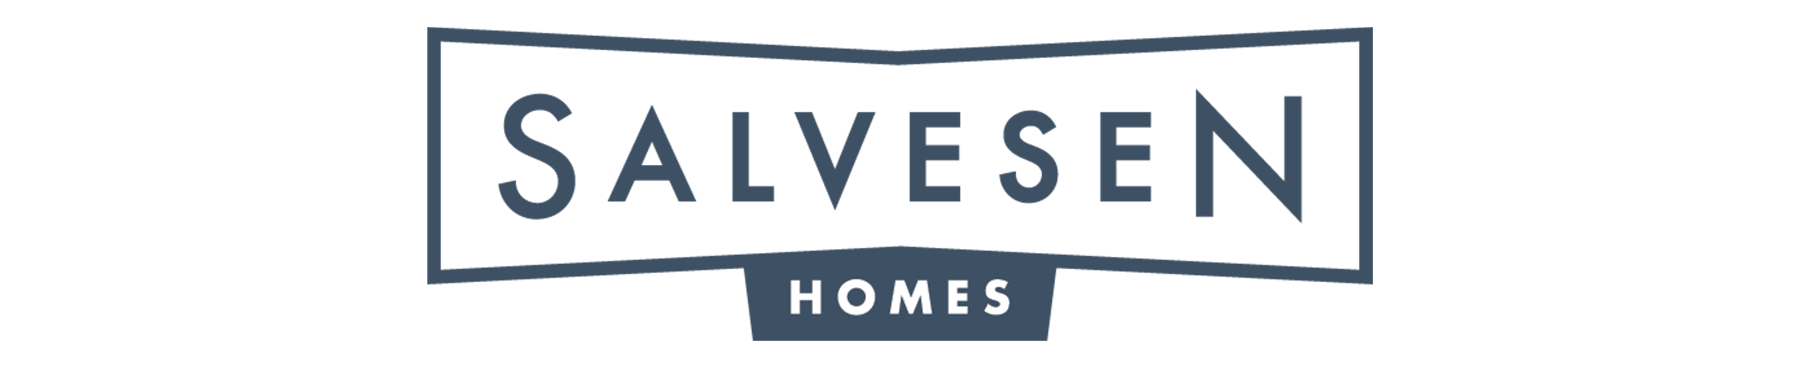 Salvesen Homes logo